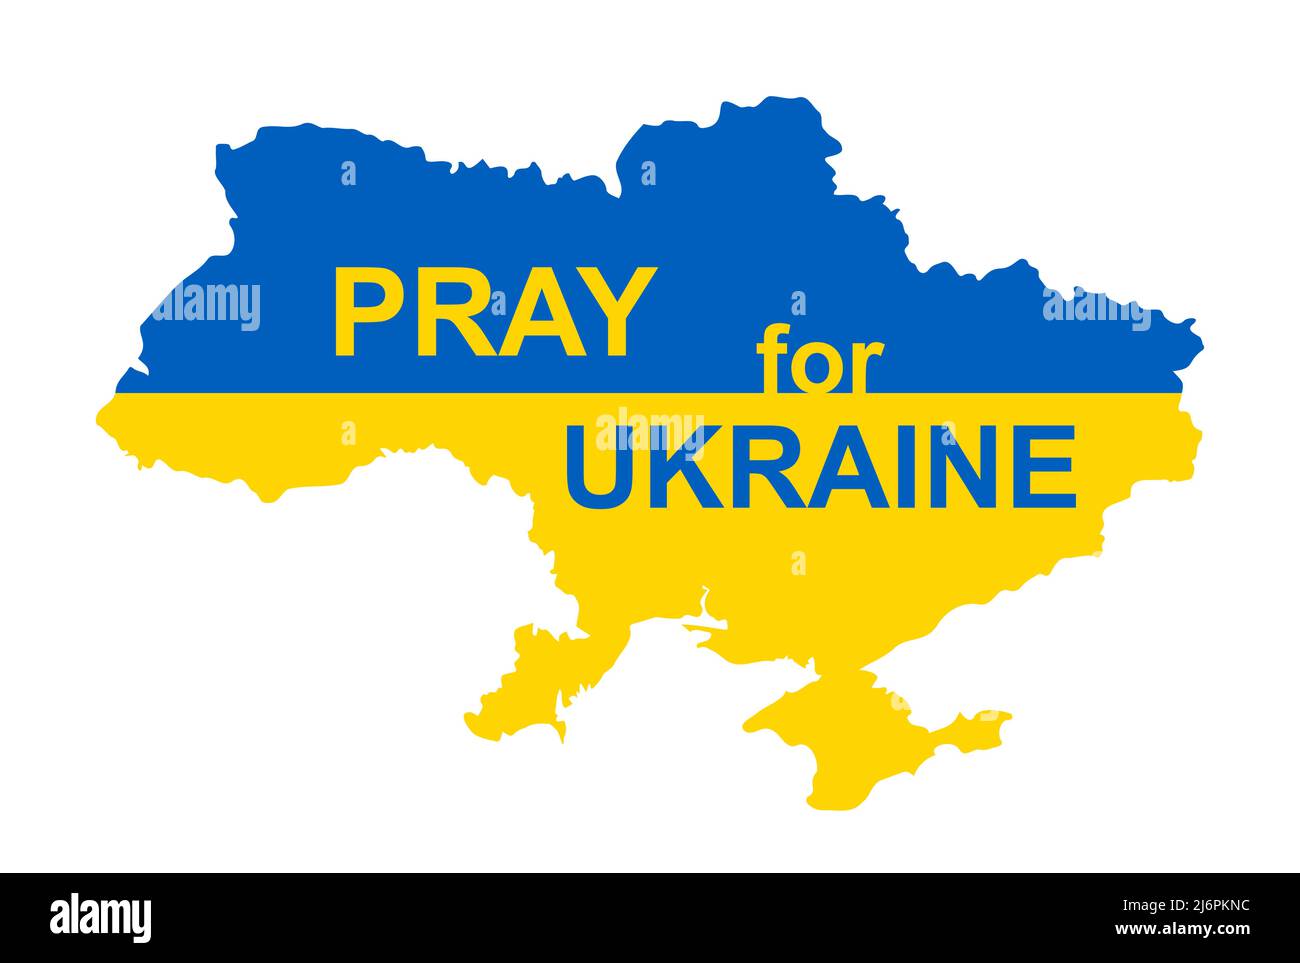 Ukraine national flag in Ukrainian map form - Pray for Ukraine concept, for banner and web design, vector illustration close-up Stock Vector